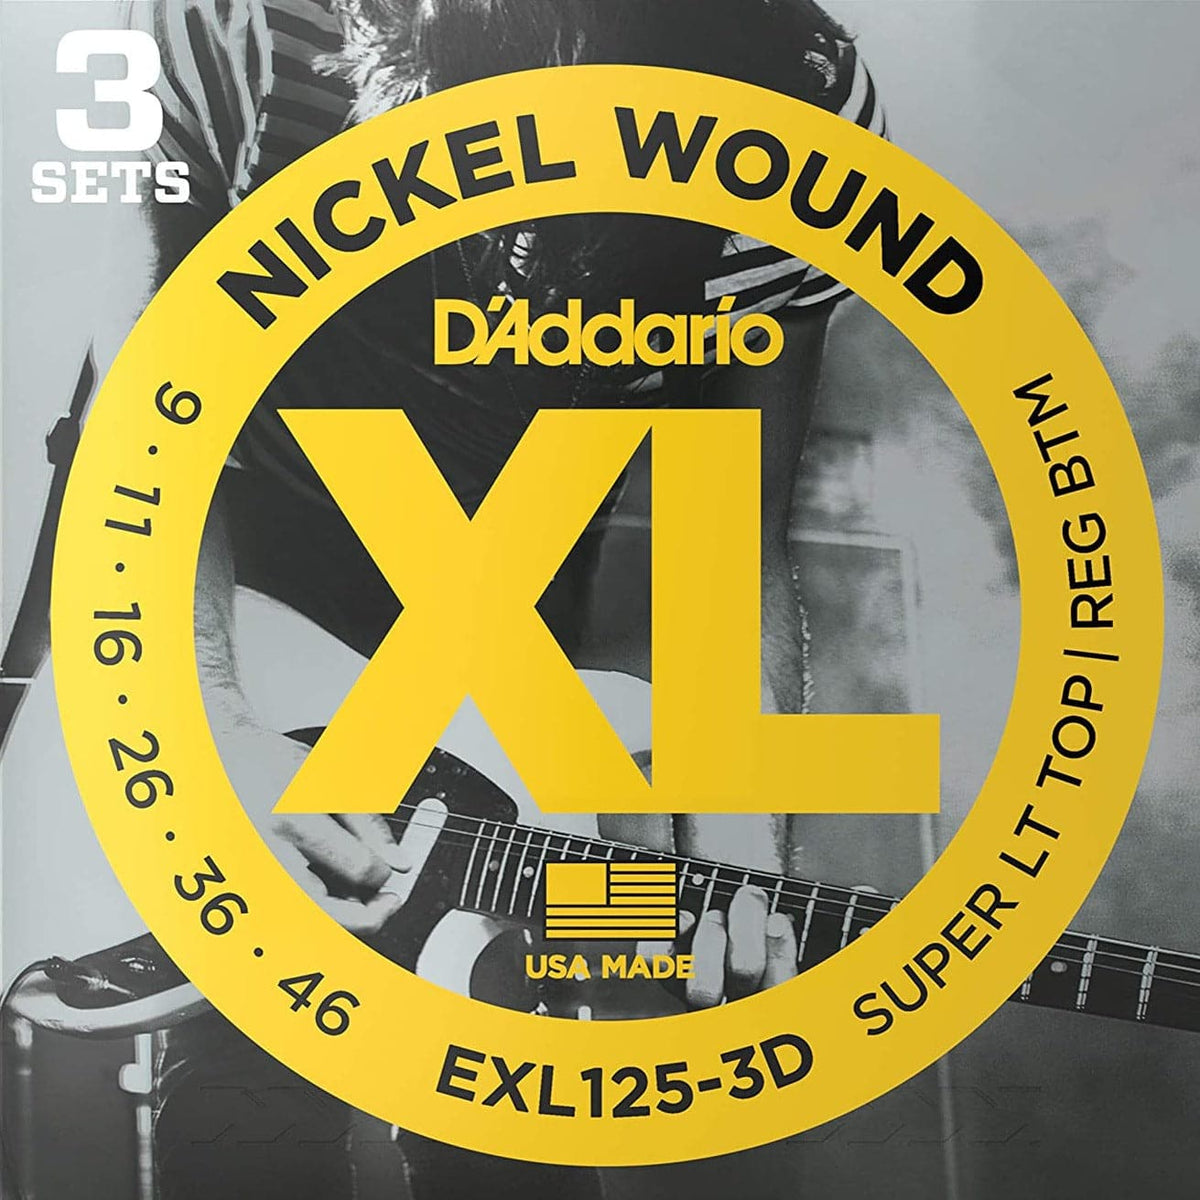 D'Addario EXL125-3D XL Electric Guitar Strings - Light Top / Reg Bottom 9-46 - 3 Pack